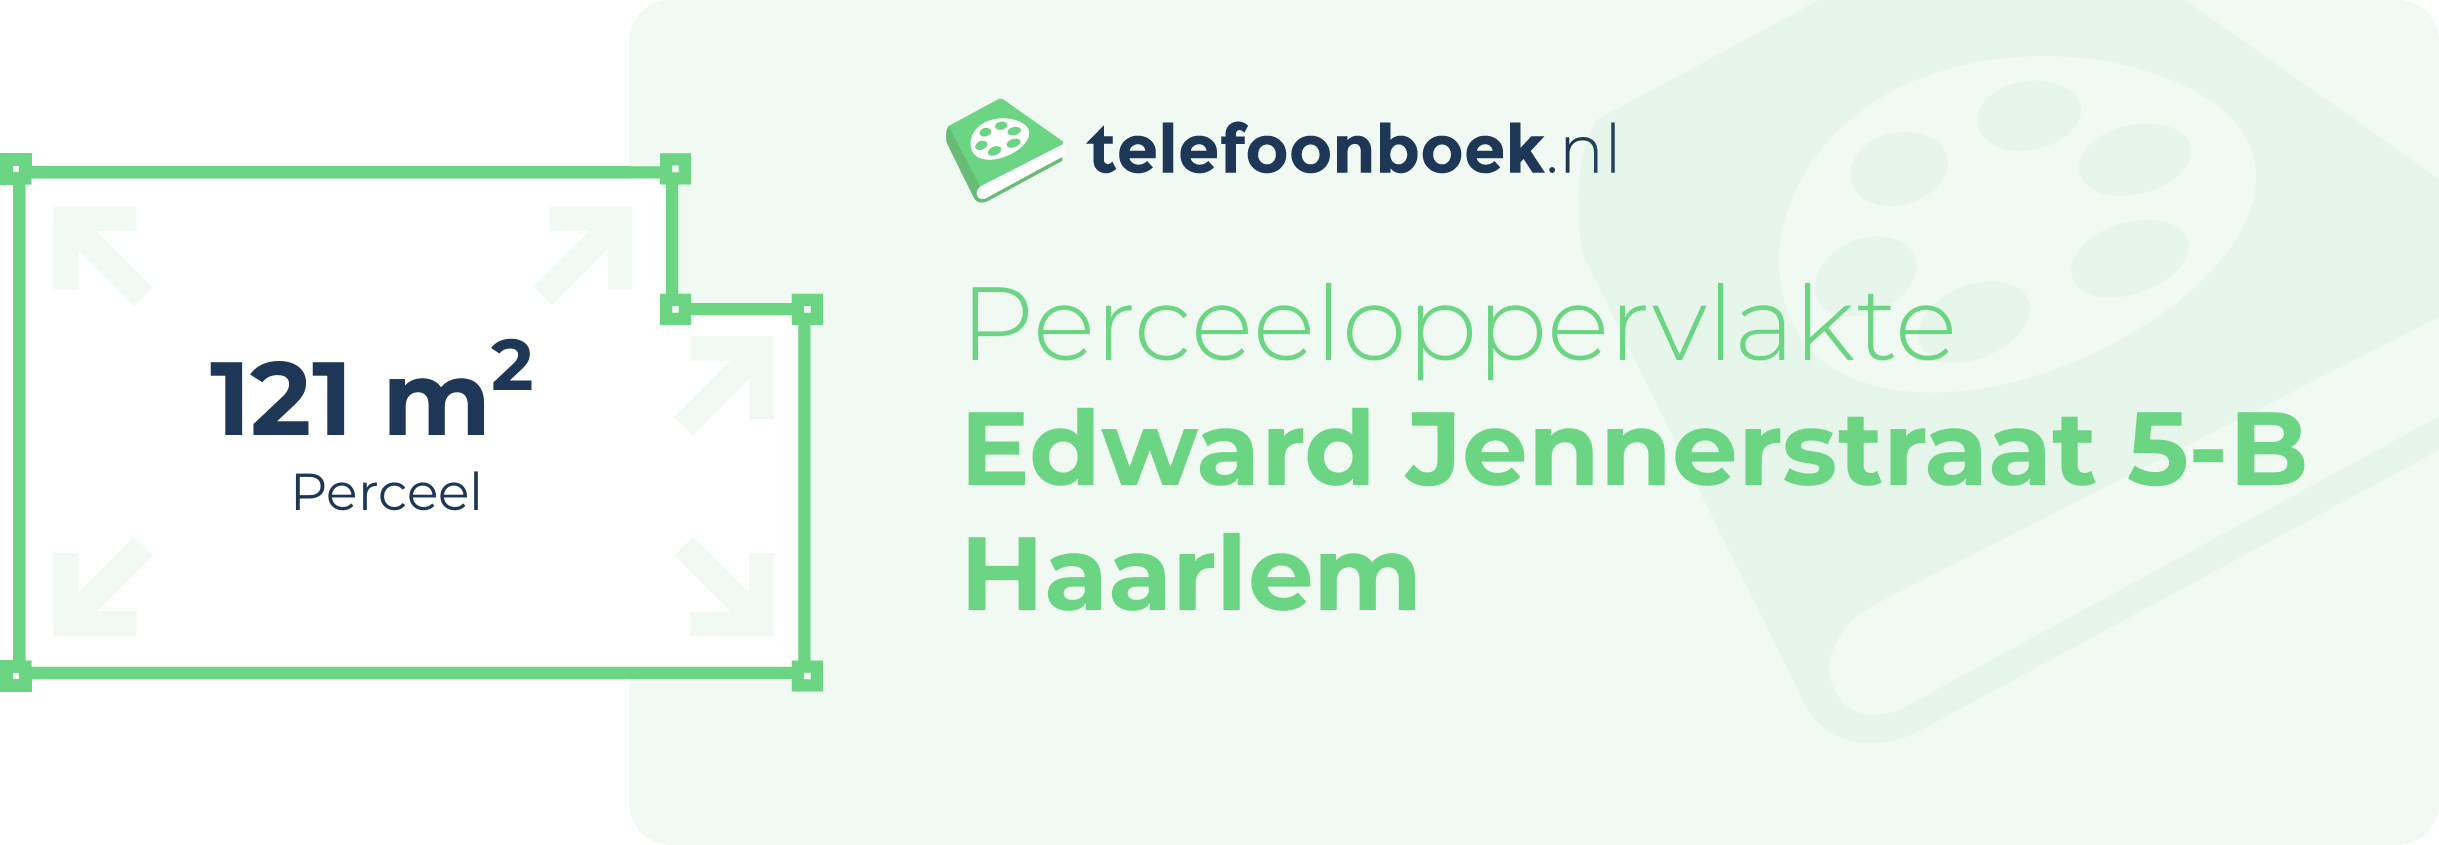 Perceeloppervlakte Edward Jennerstraat 5-B Haarlem